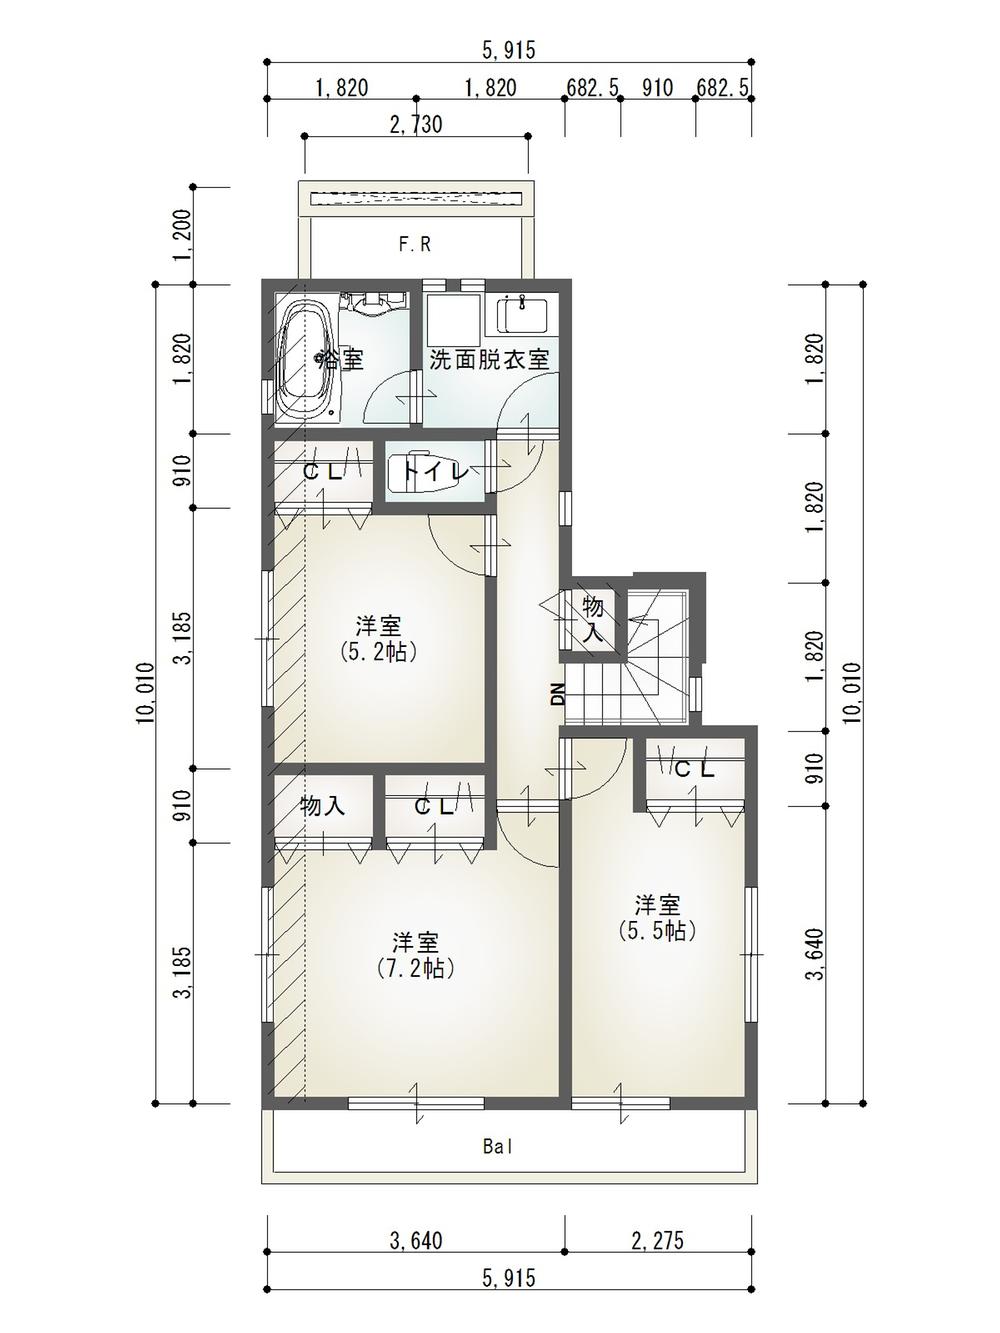 Building plan example (Perth ・ Introspection). Building plan example Second floor (No. 5 locations) 49.68 sq m